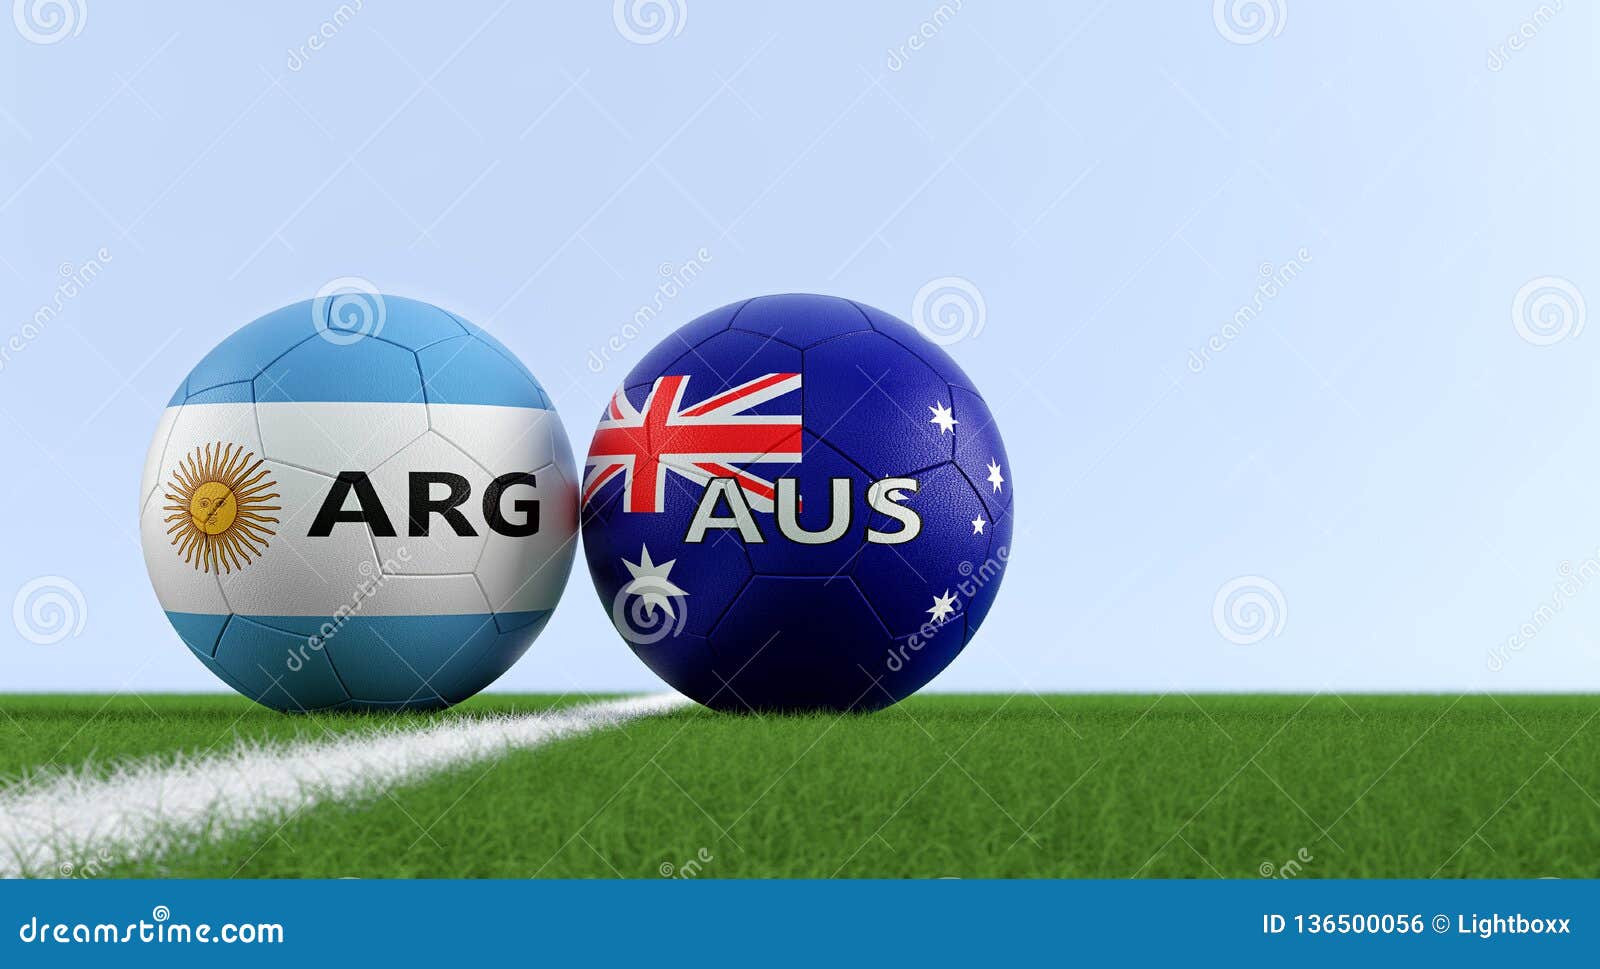 Argentina Vs. Australia Soccer Match - Soccer Balls in Argentina and